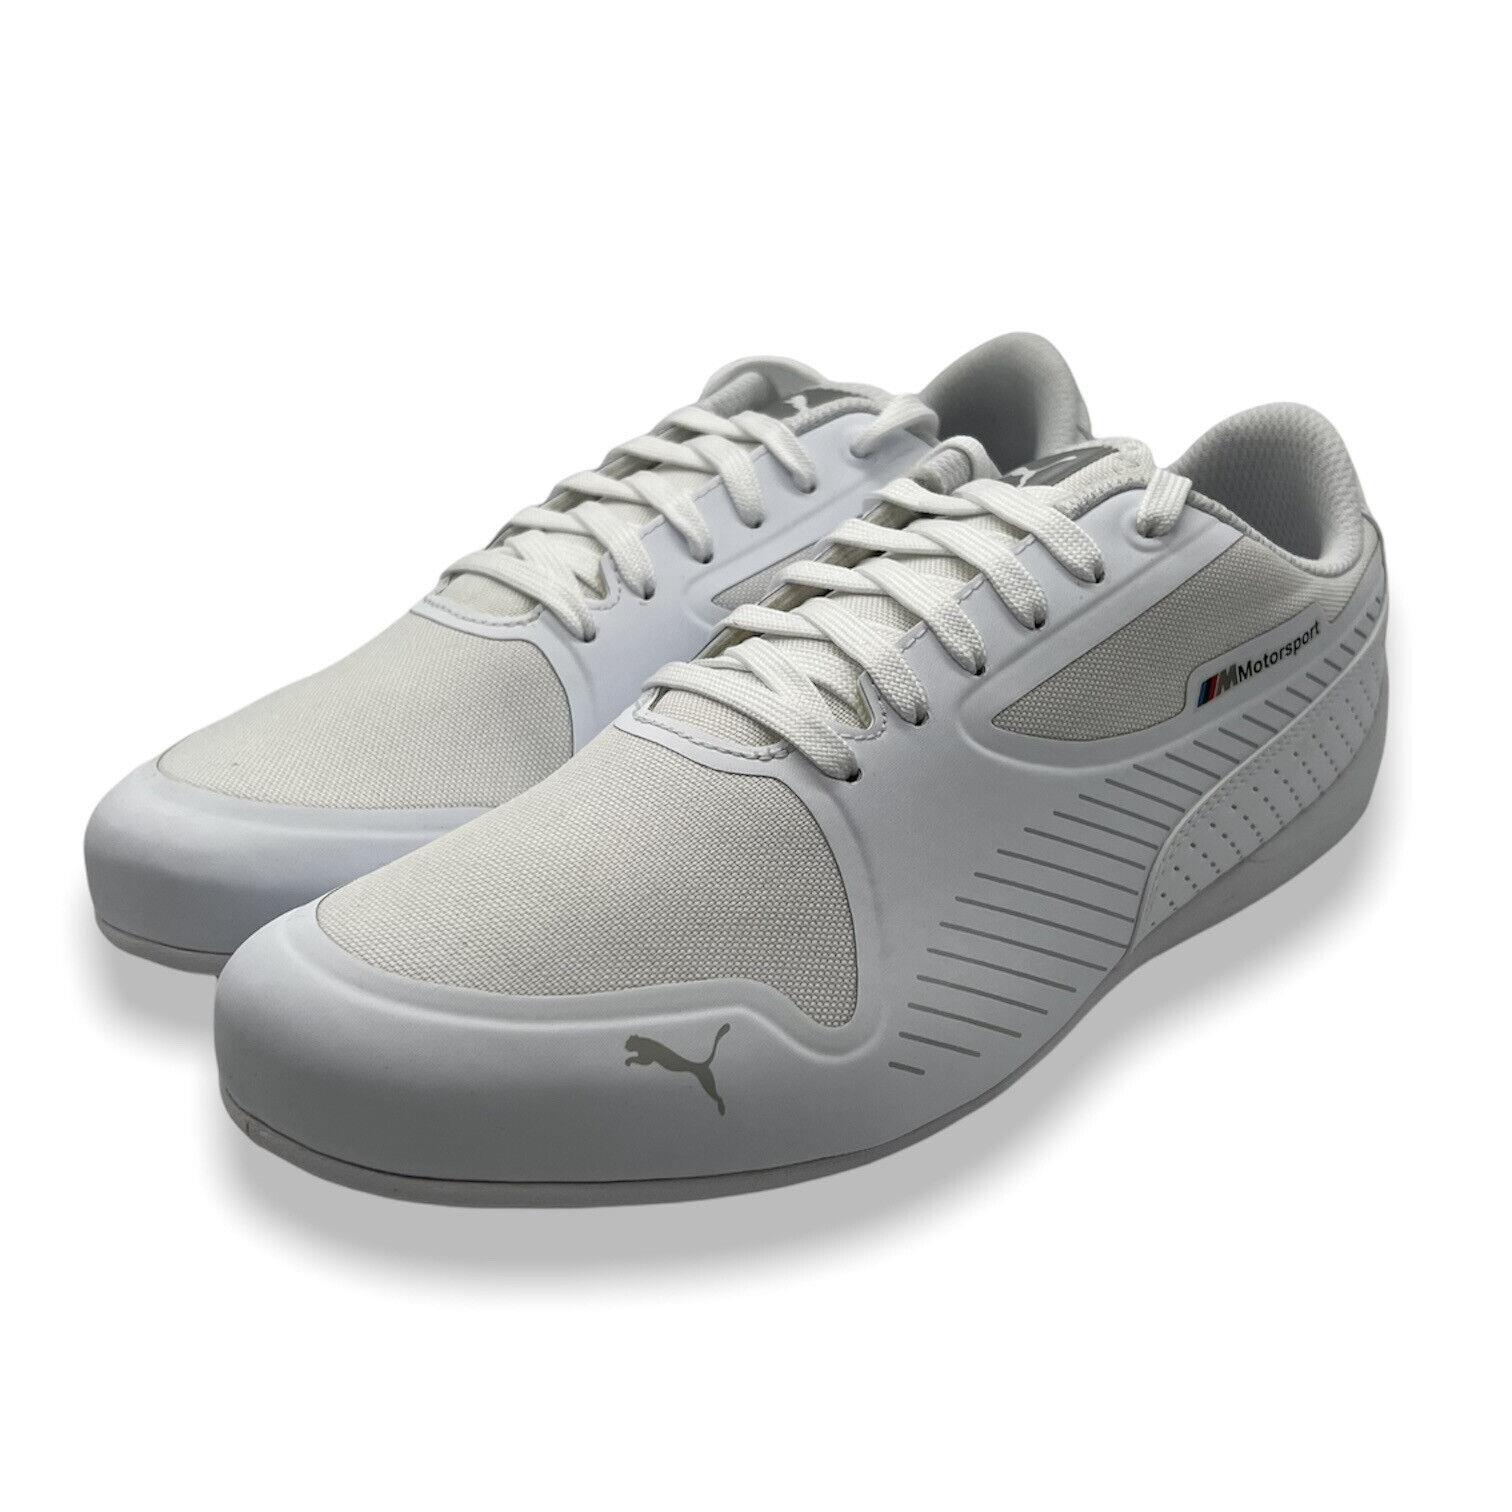 Puma Unisex Adults White 306386 02 Bmw Mms Drift Cat 7 Ultra Sneaker Shoes 7.5